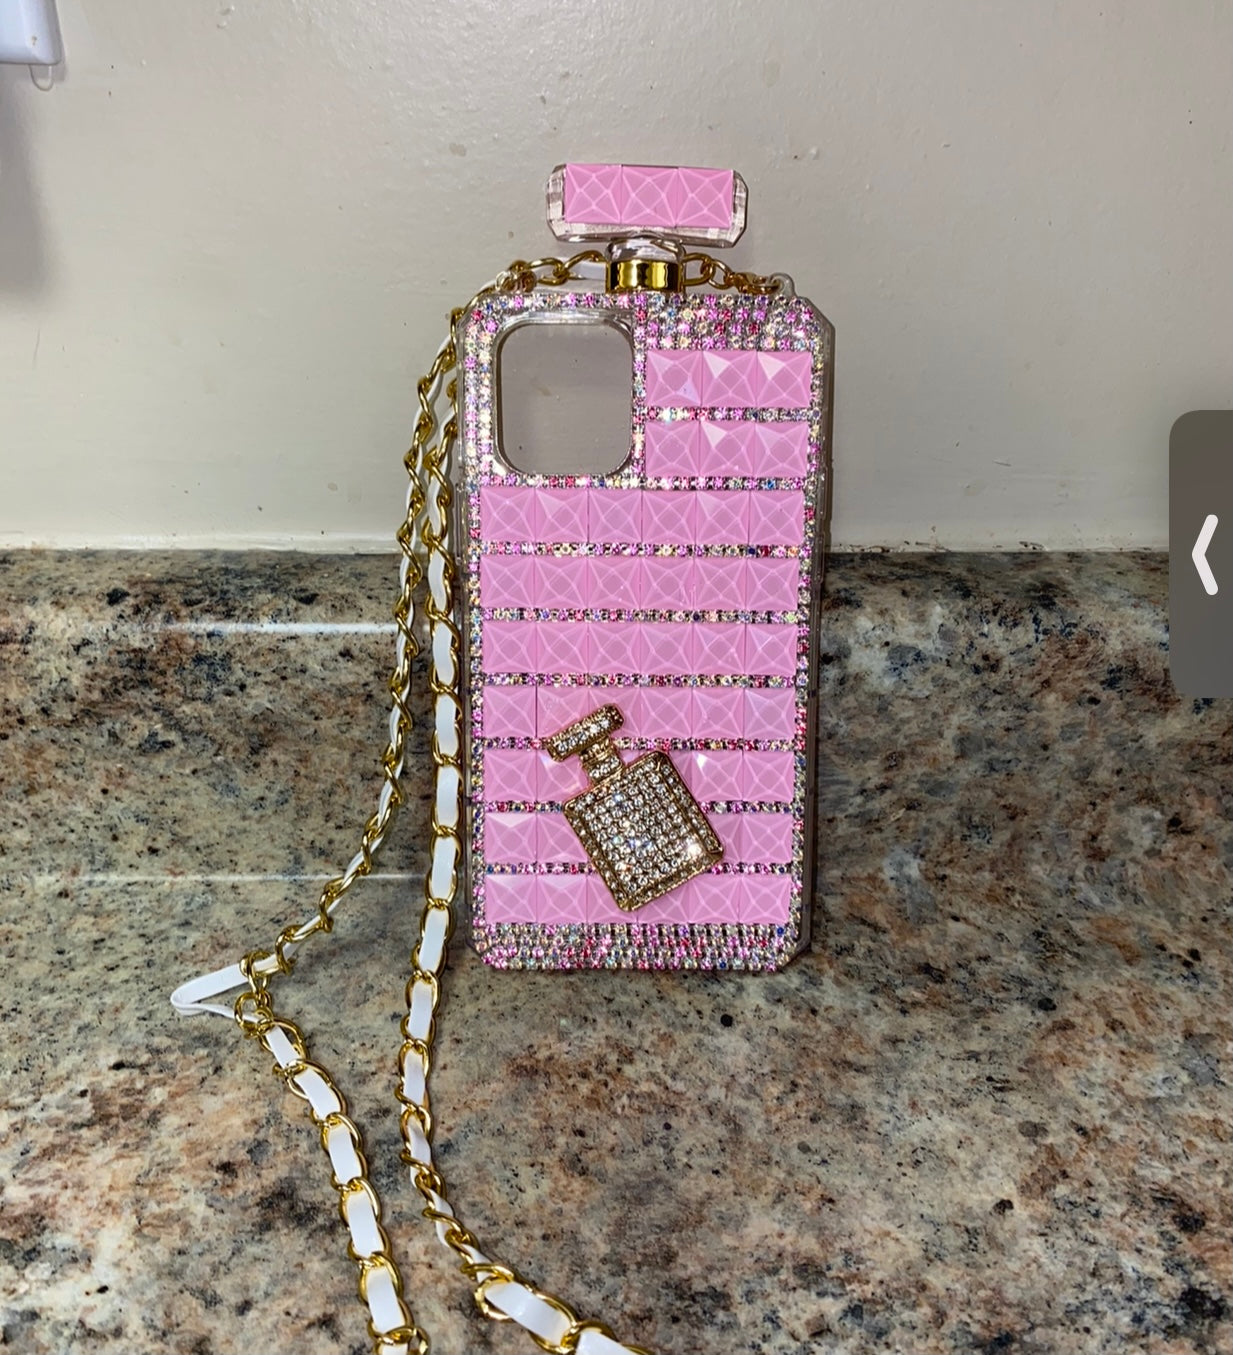 Perfume Bottle Iphone Case